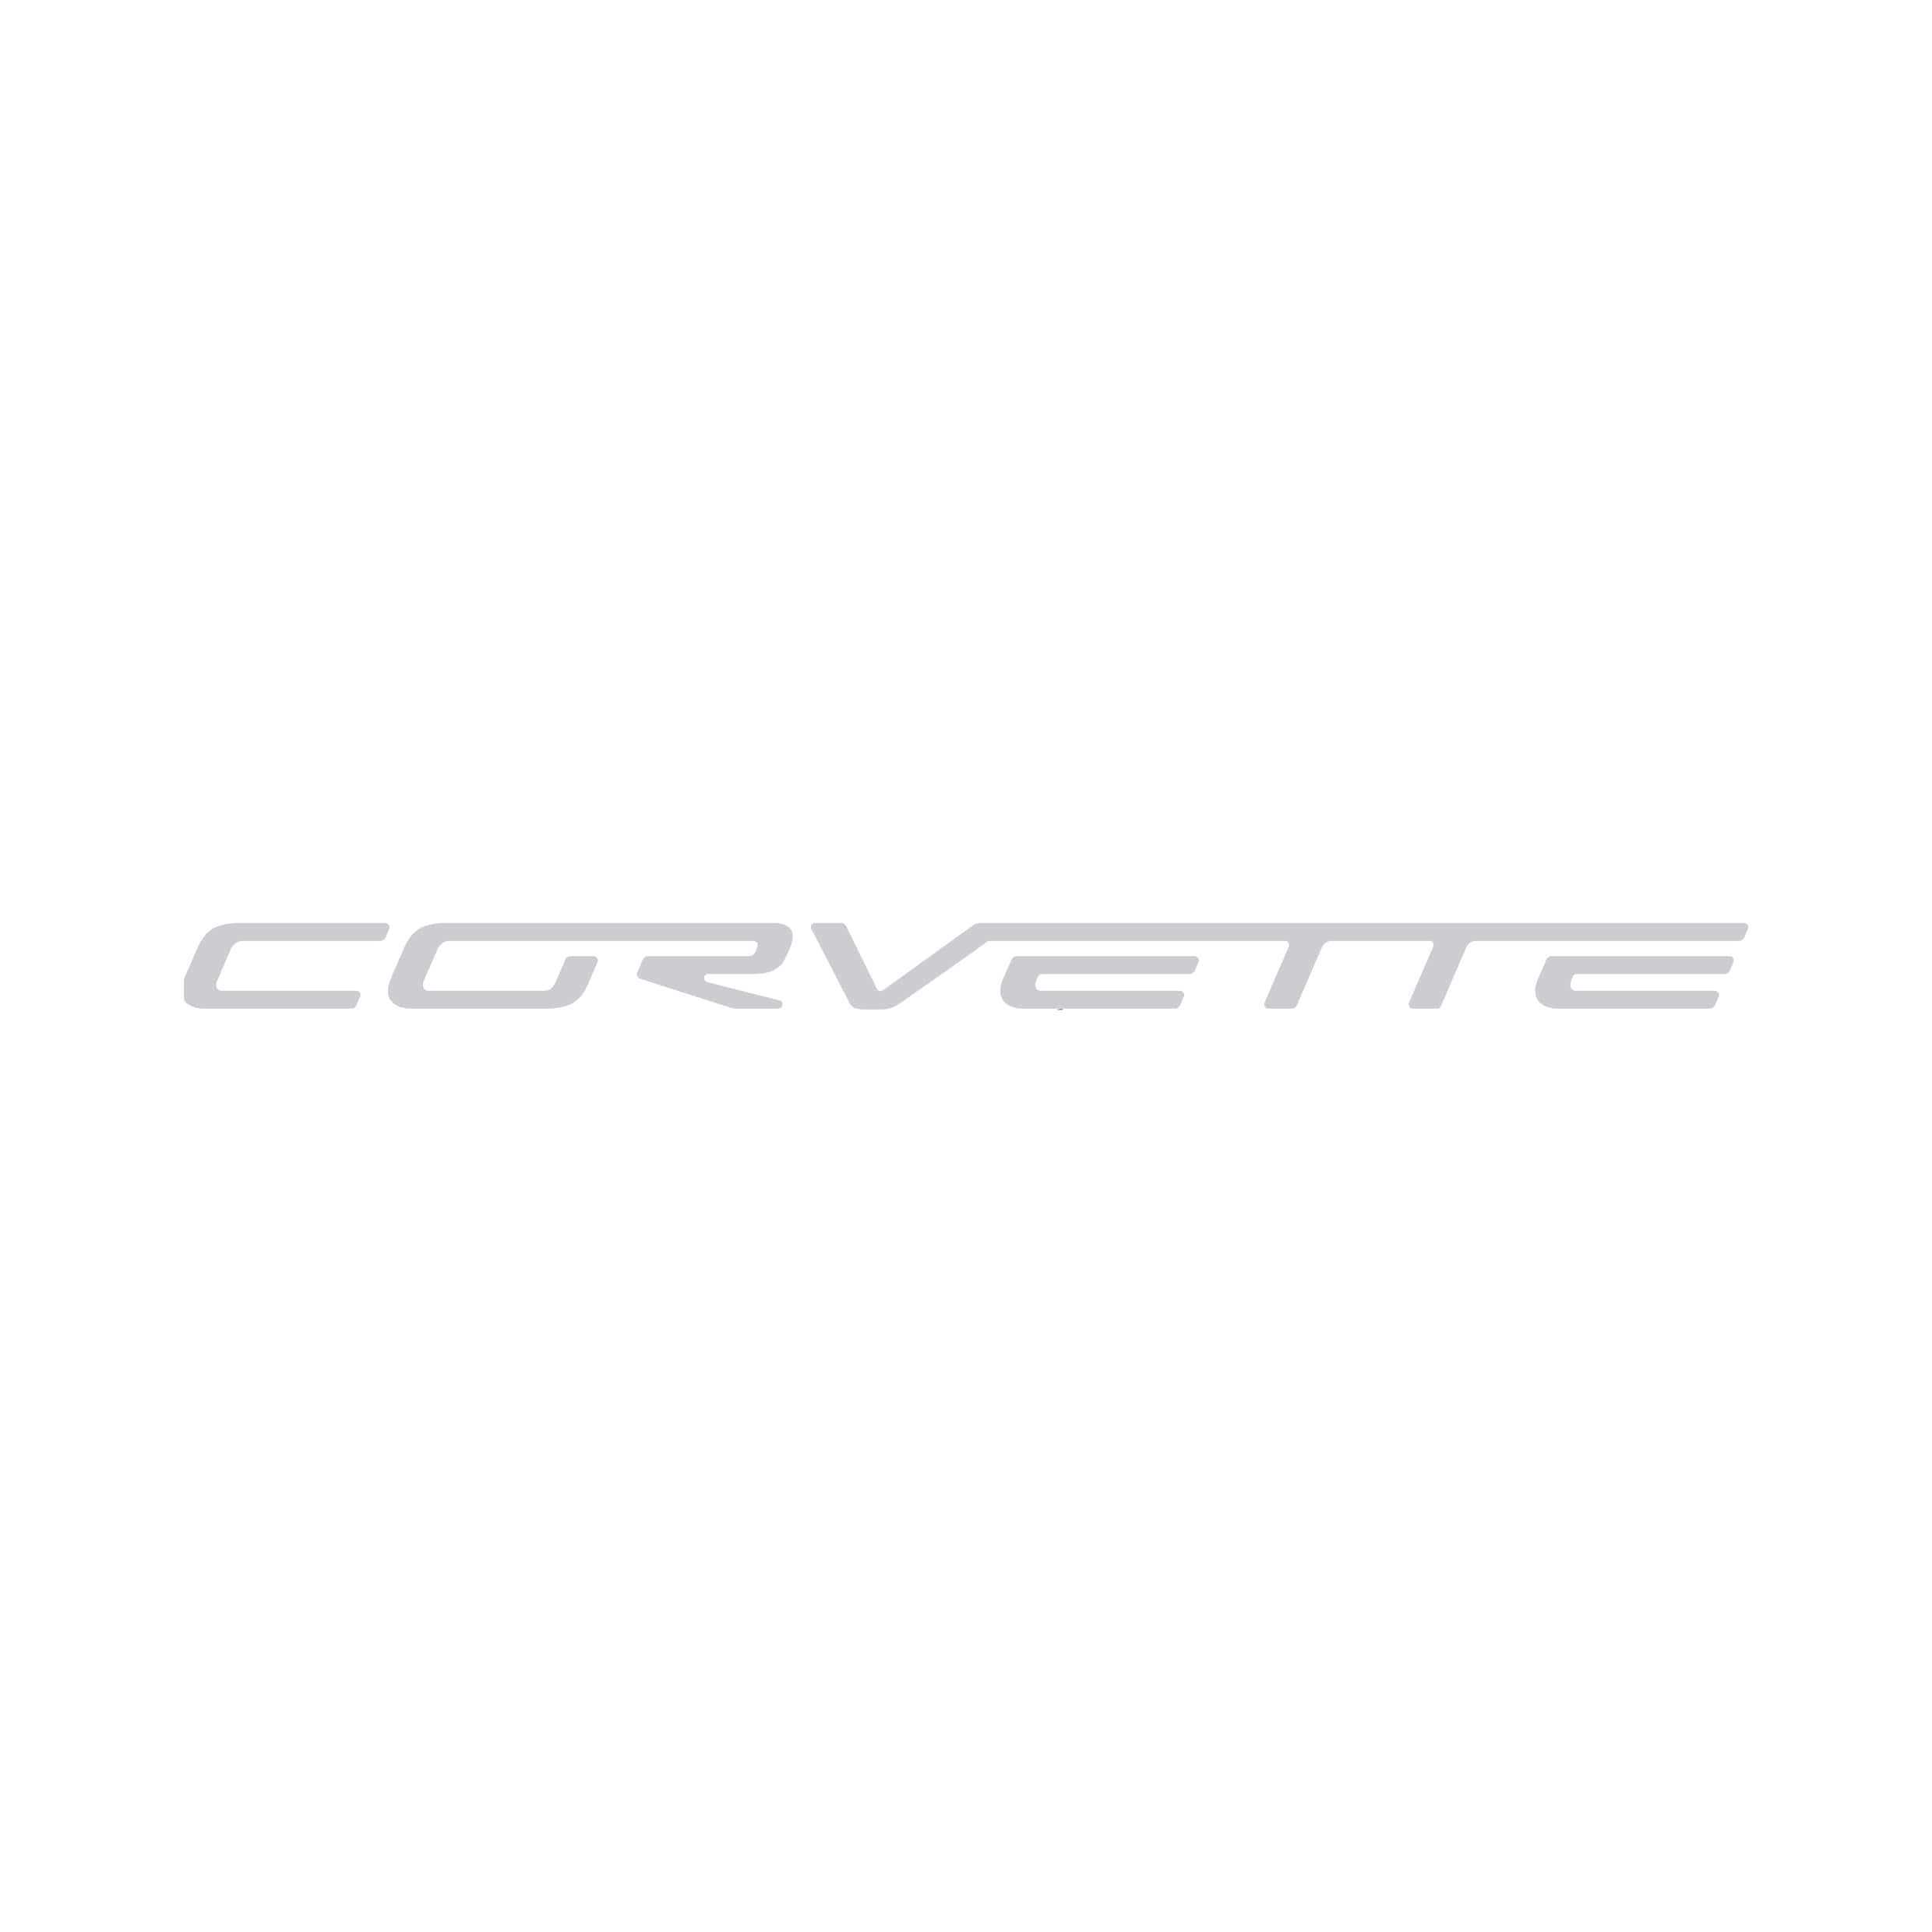 stickers-corvette-chevrolet-ref45-autocollant-voiture-sticker-auto-autocollants-decals-sponsors-racing-tuning